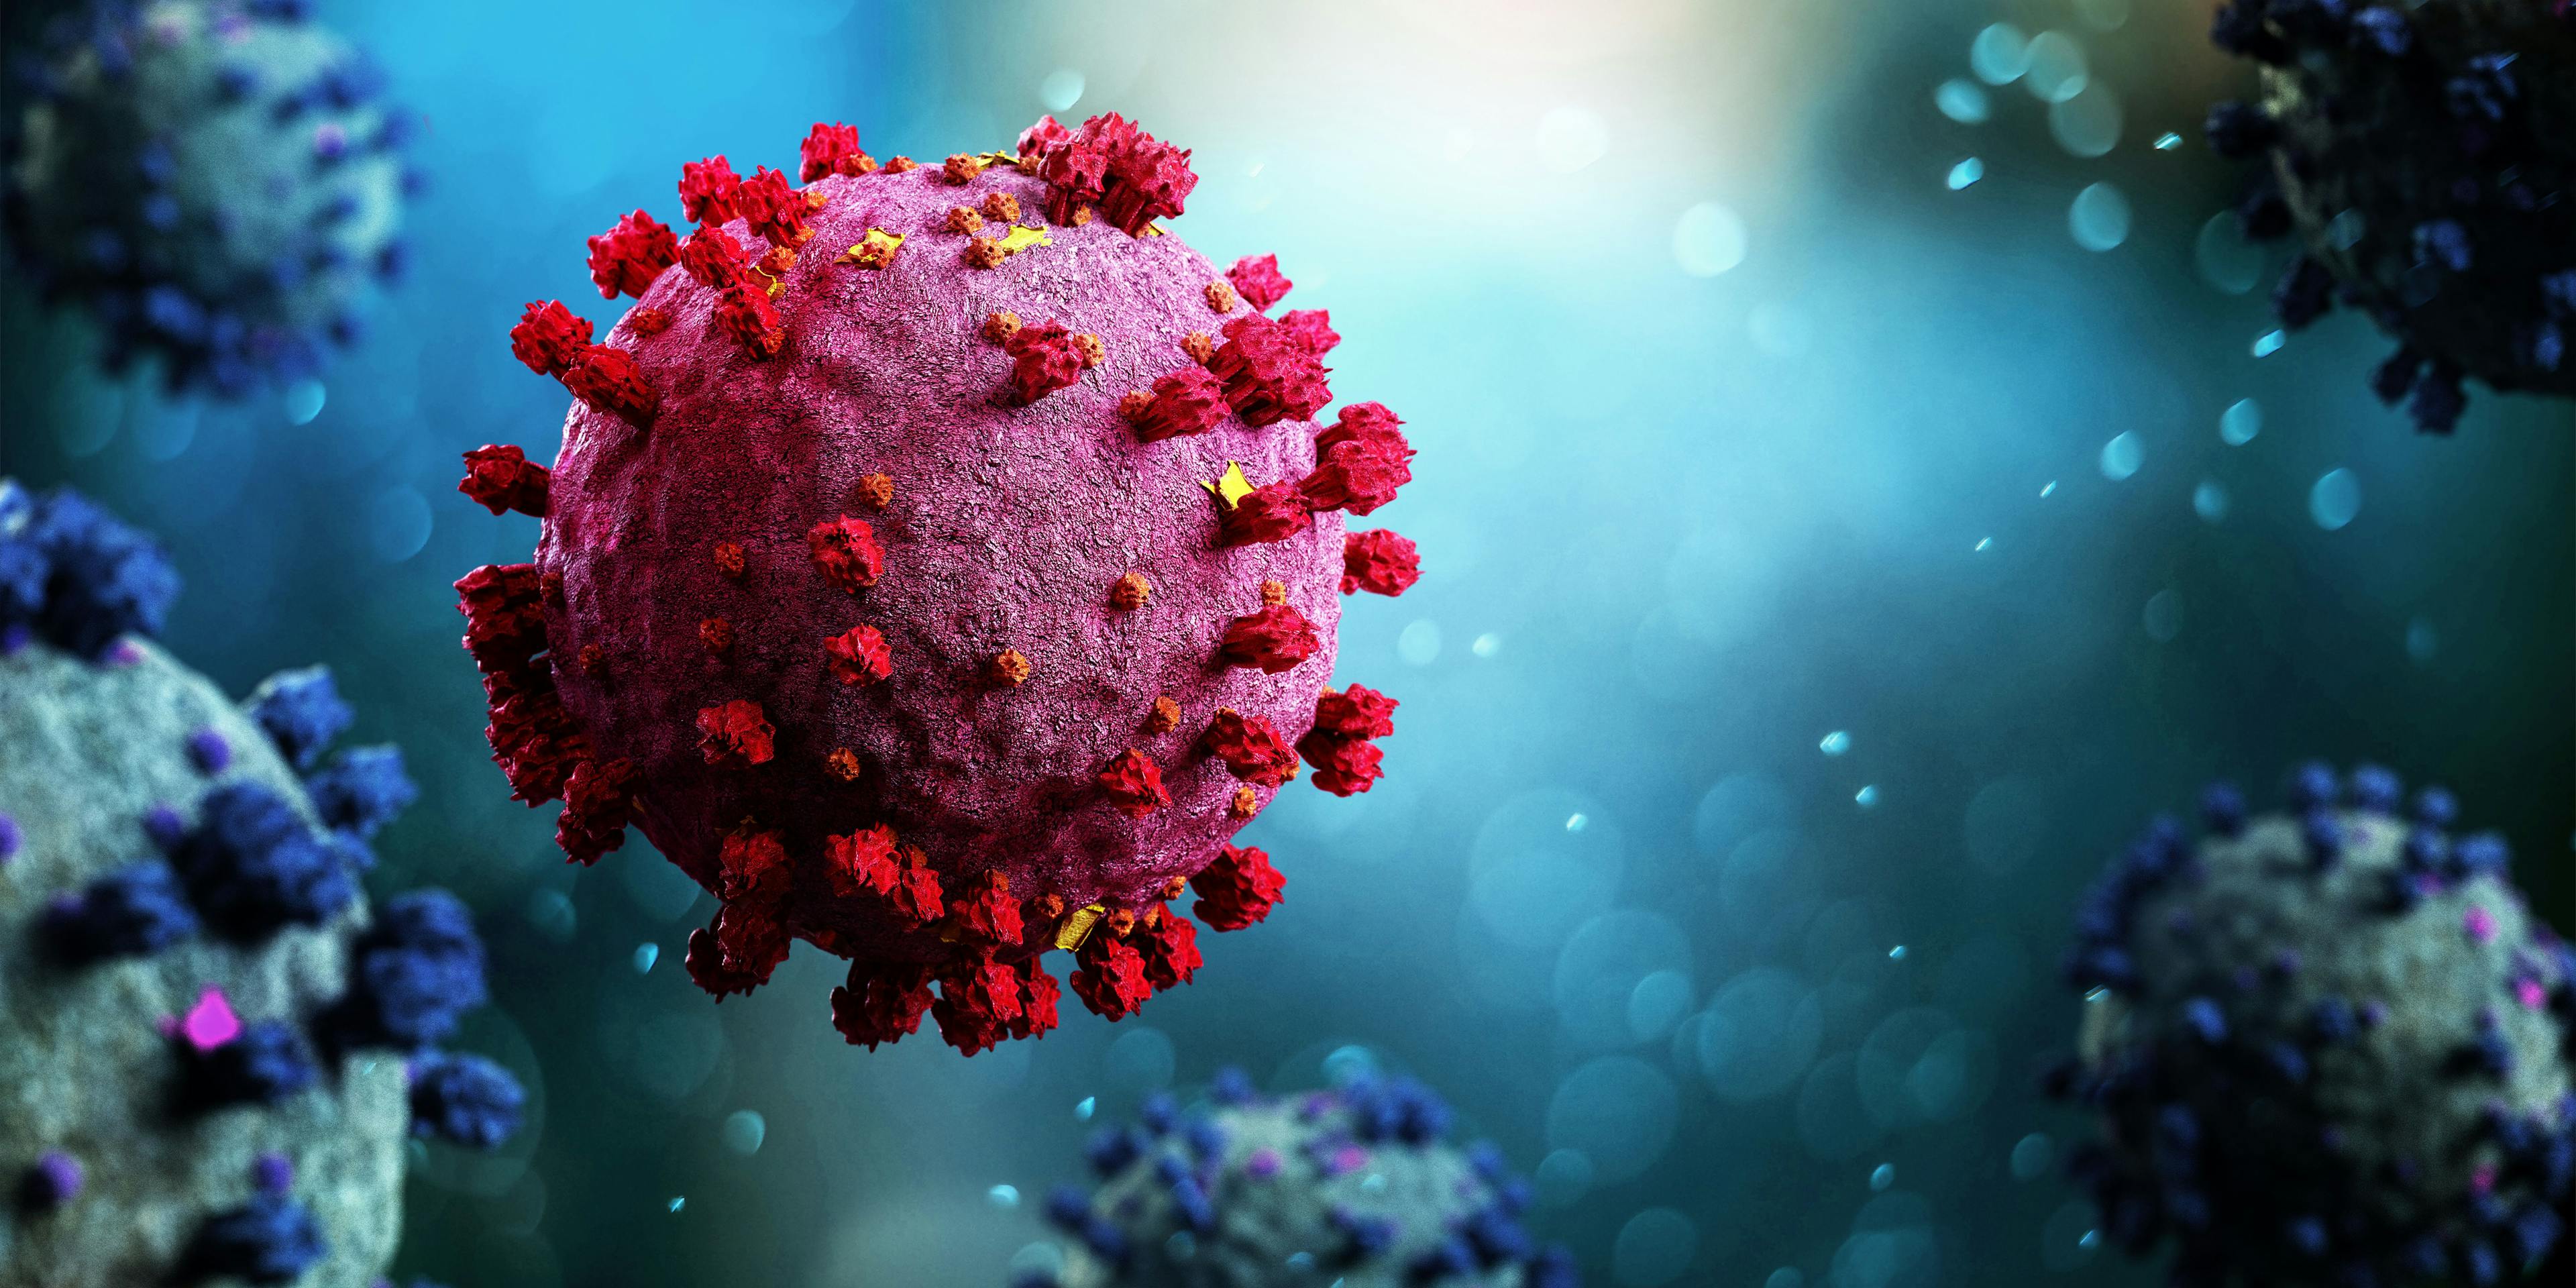 Coronavirus Covid-19 background - 3d rendering - Image credit: Production Perig | stock.adobe.com 